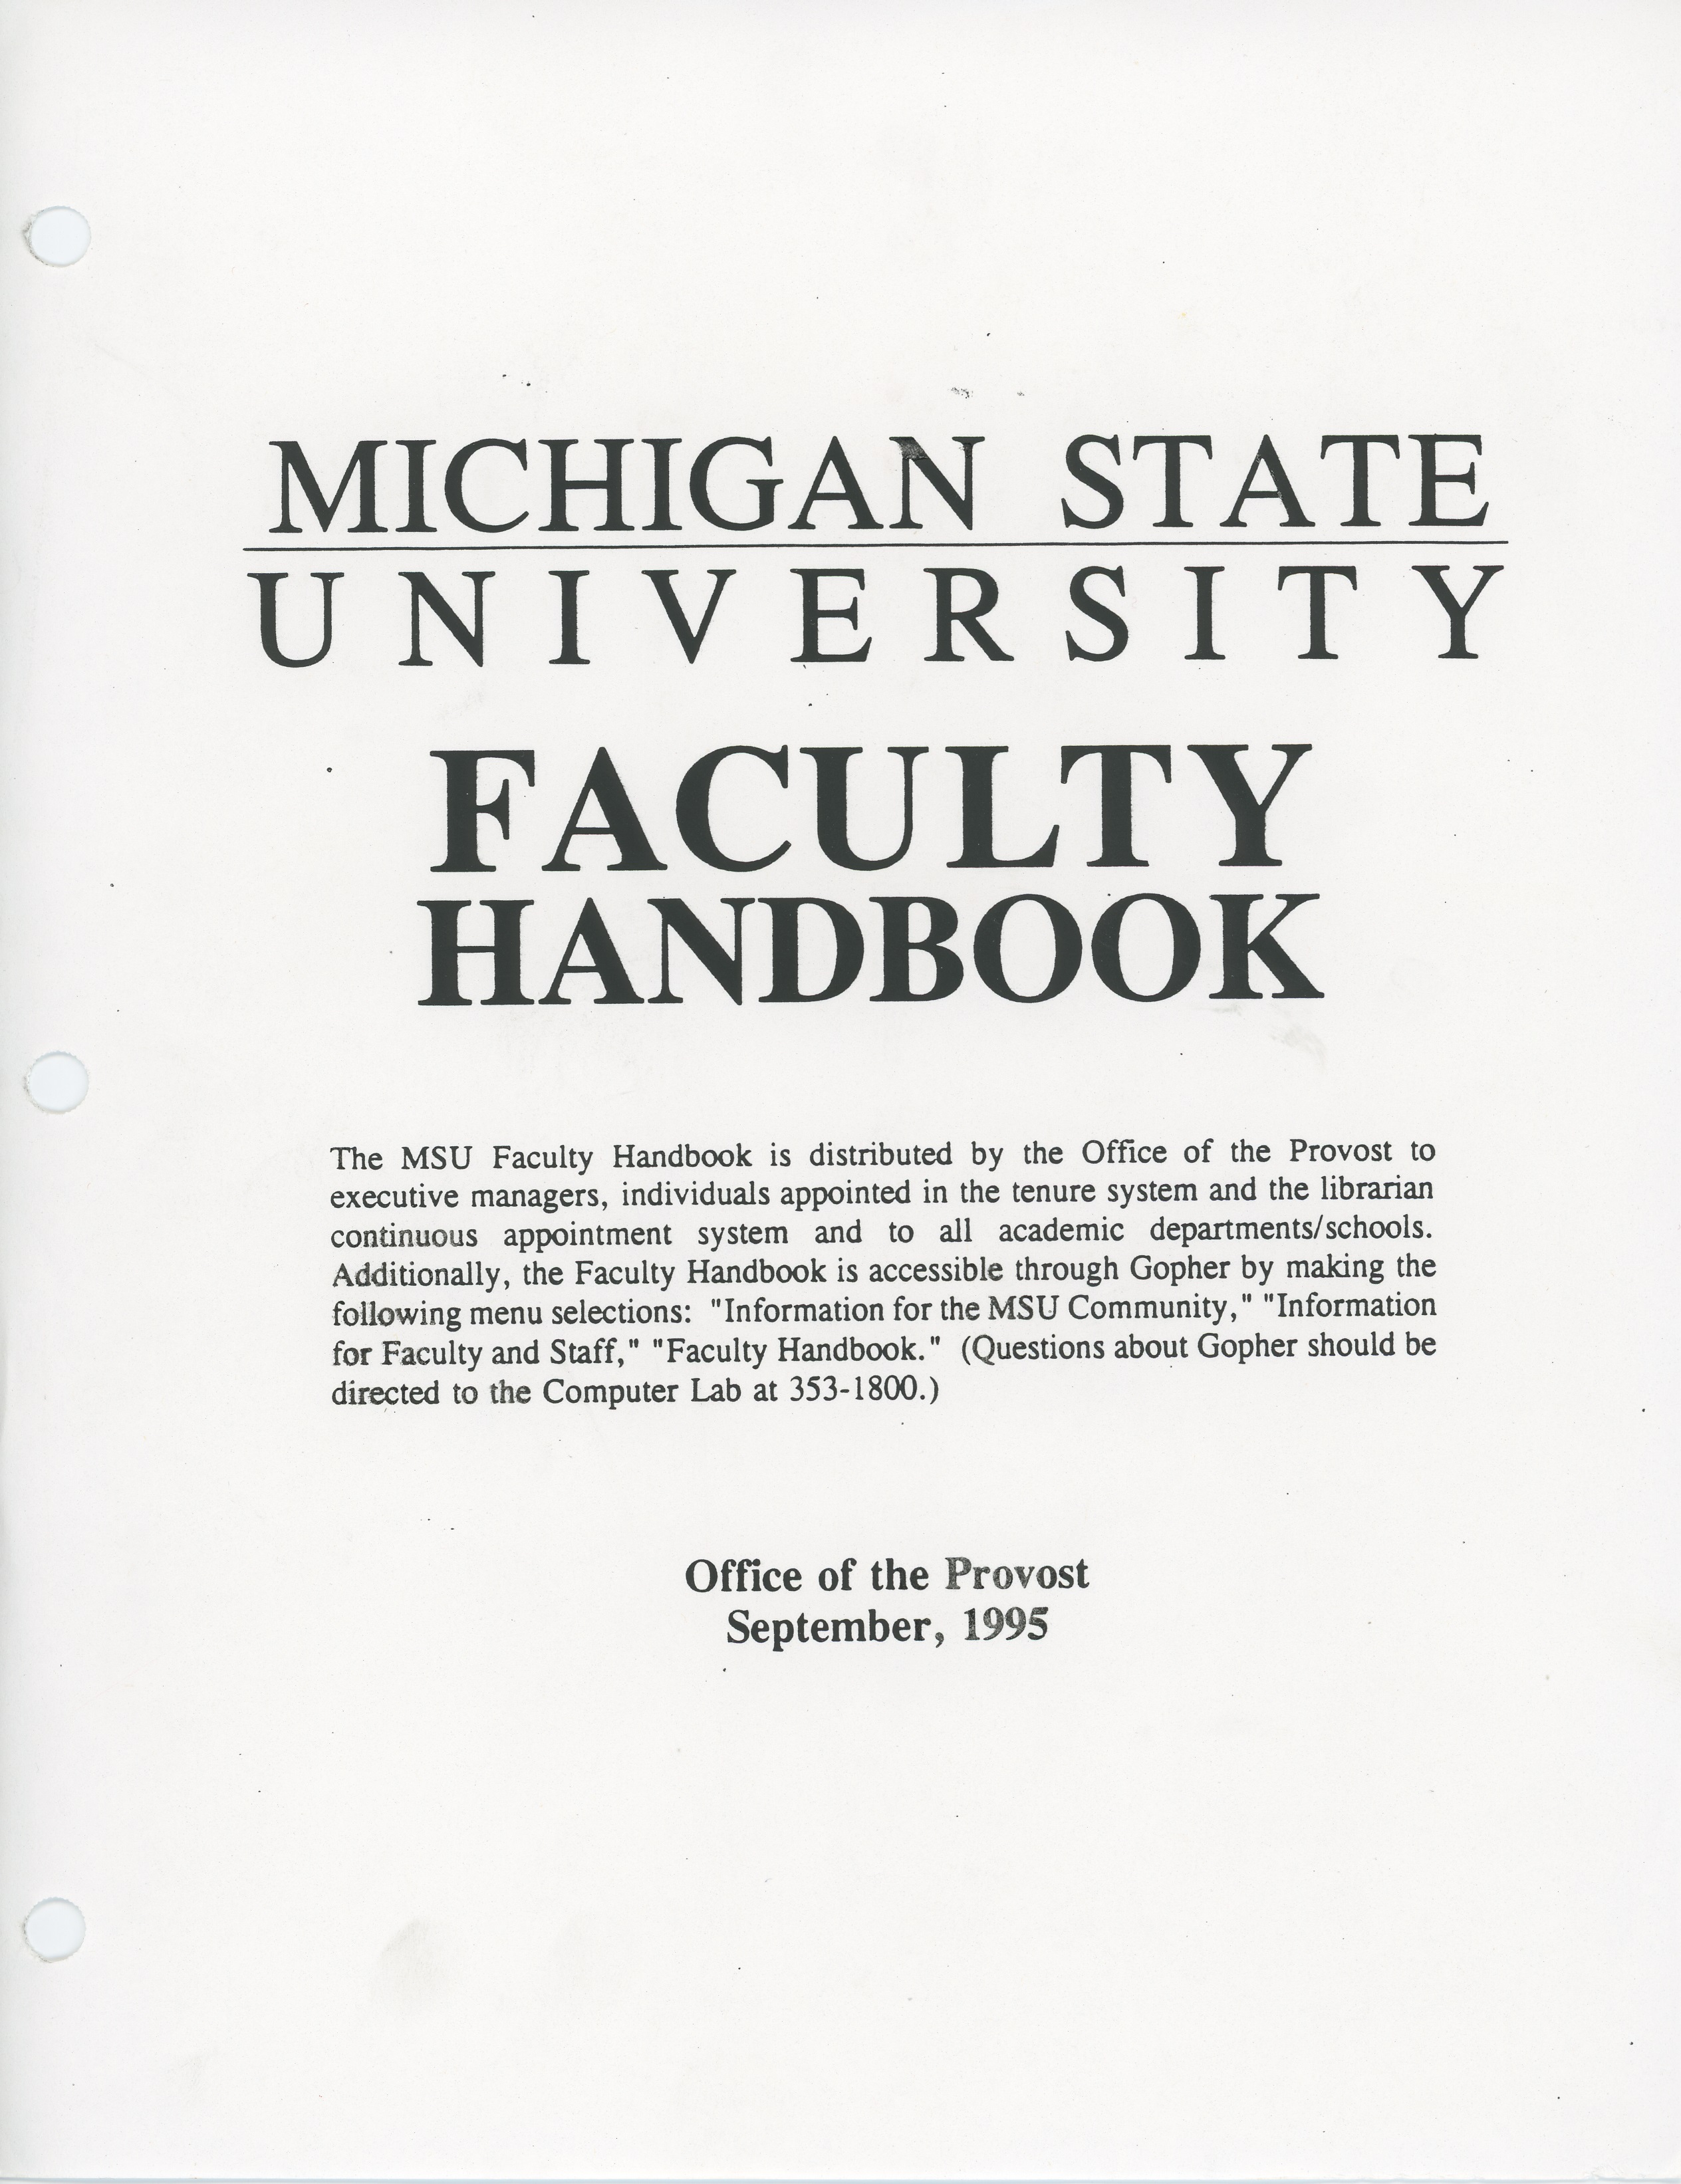 Faculty Handbook, 1995